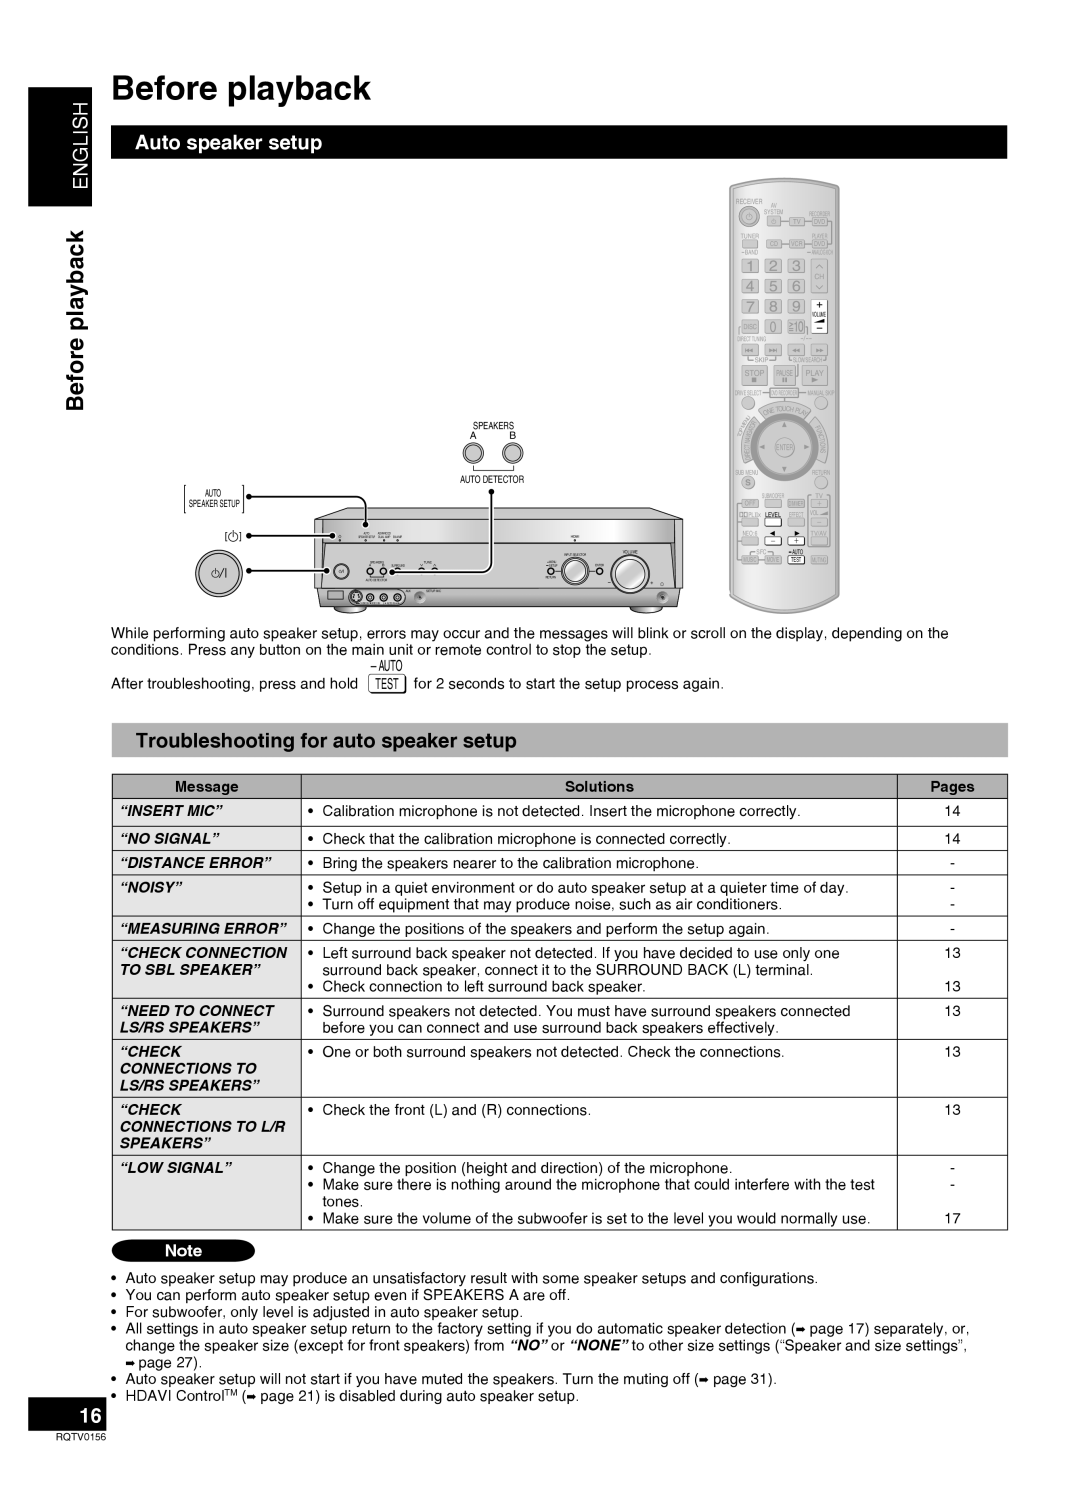 Panasonic SA-XR58 manual Before playback, Troubleshooting for auto speaker setup, English, Auto speaker setup, “Insert Mic” 